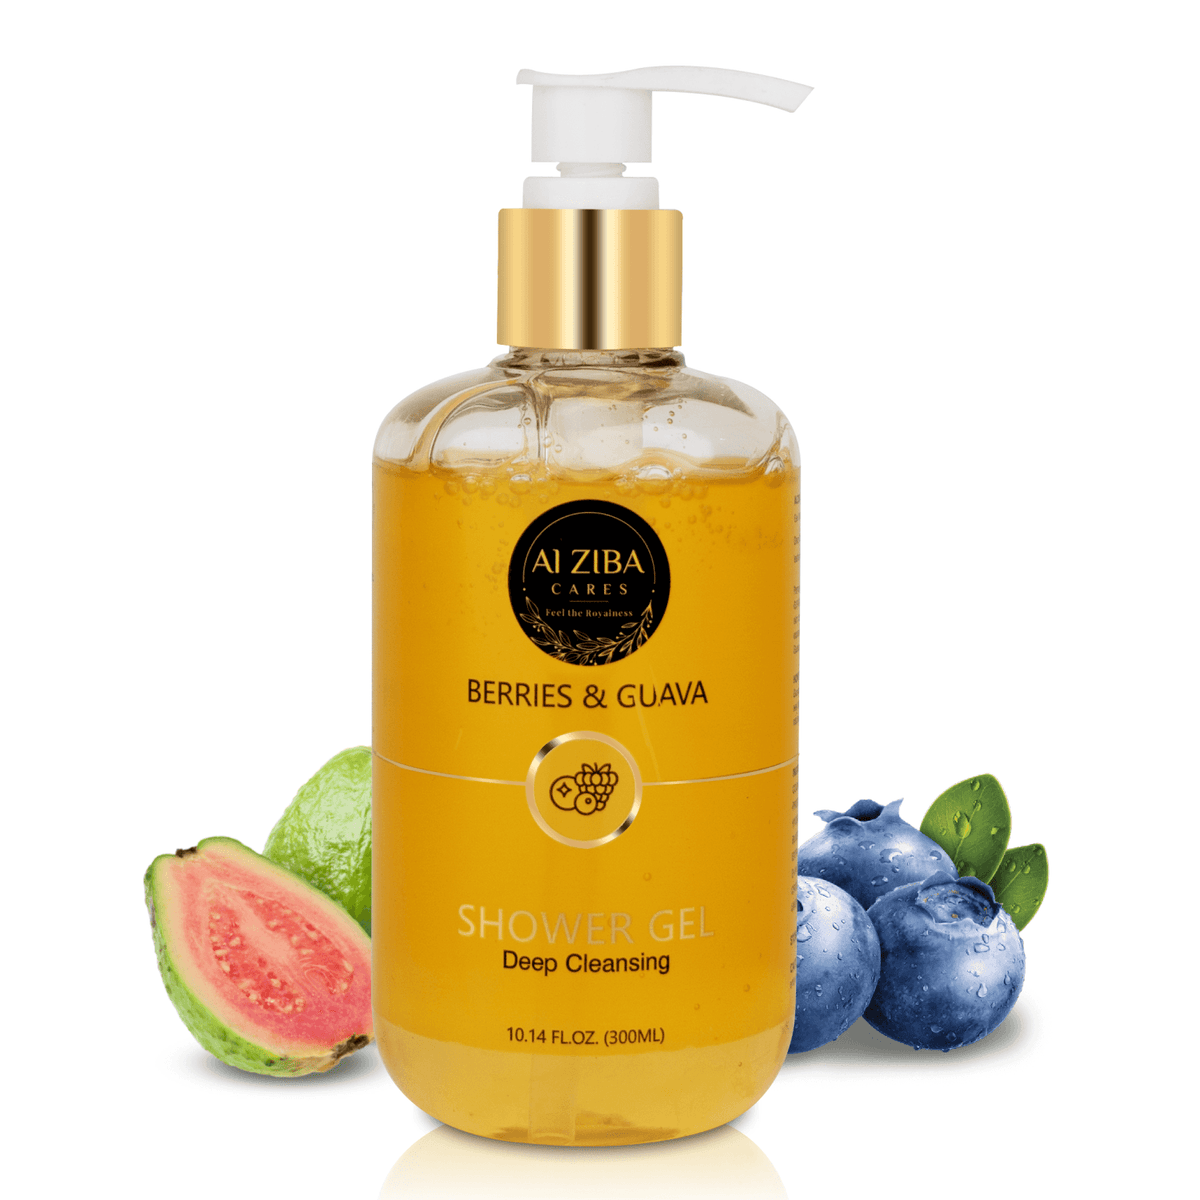 Berries & Guava Deep Cleansing Shower Gel-300ML - ALZIBA CARES